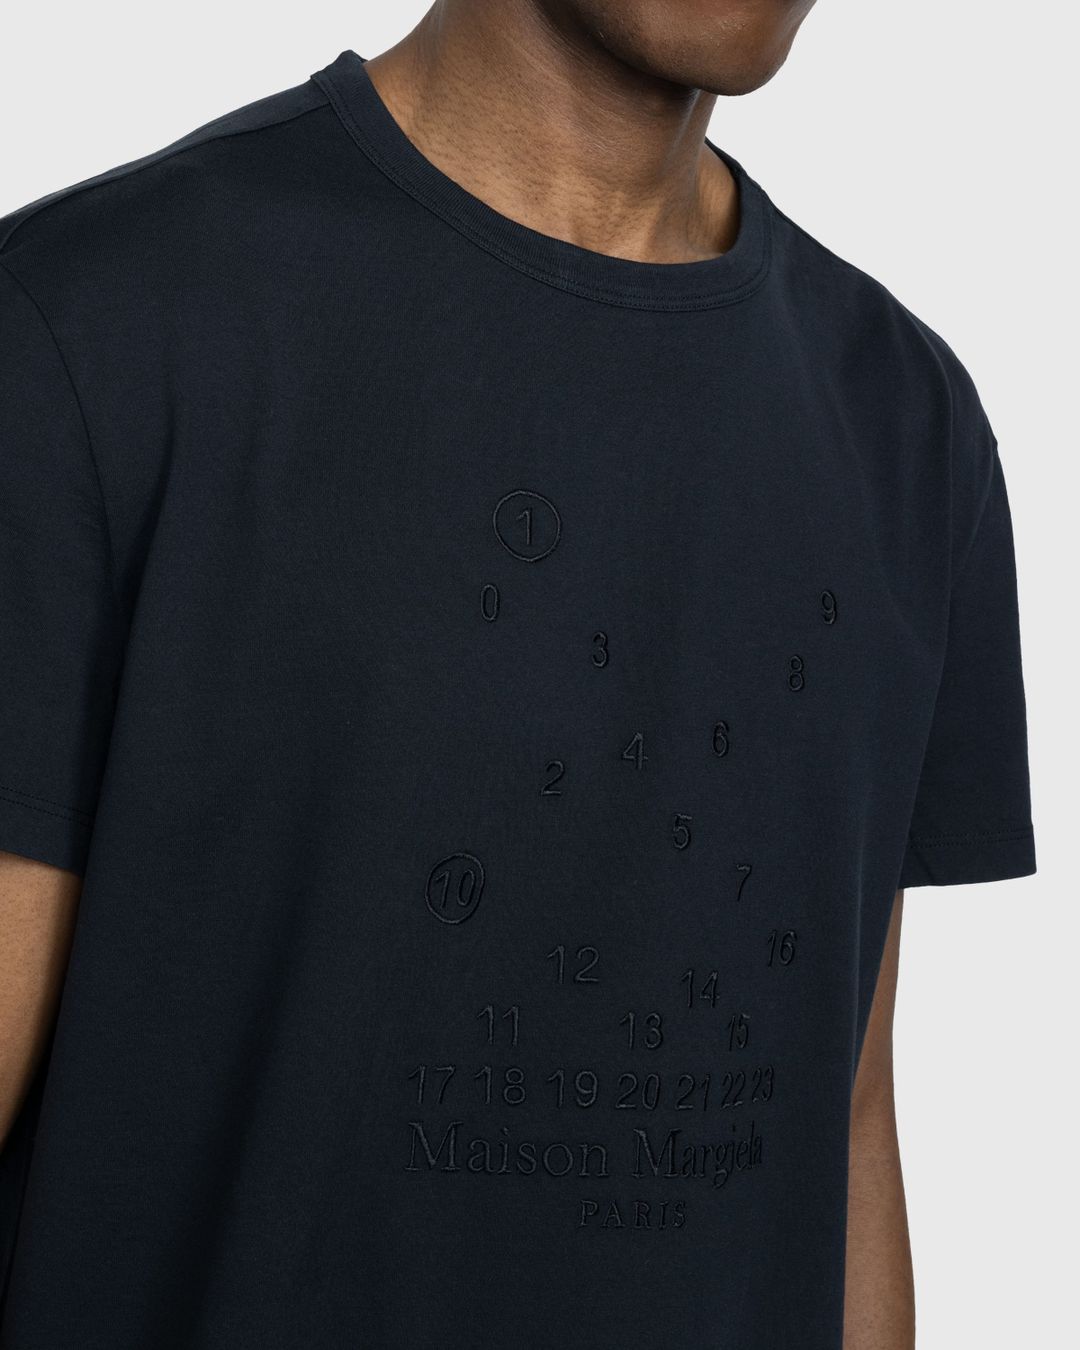 Maison Margiela – Numerical Logo T-Shirt Grey | Highsnobiety Shop